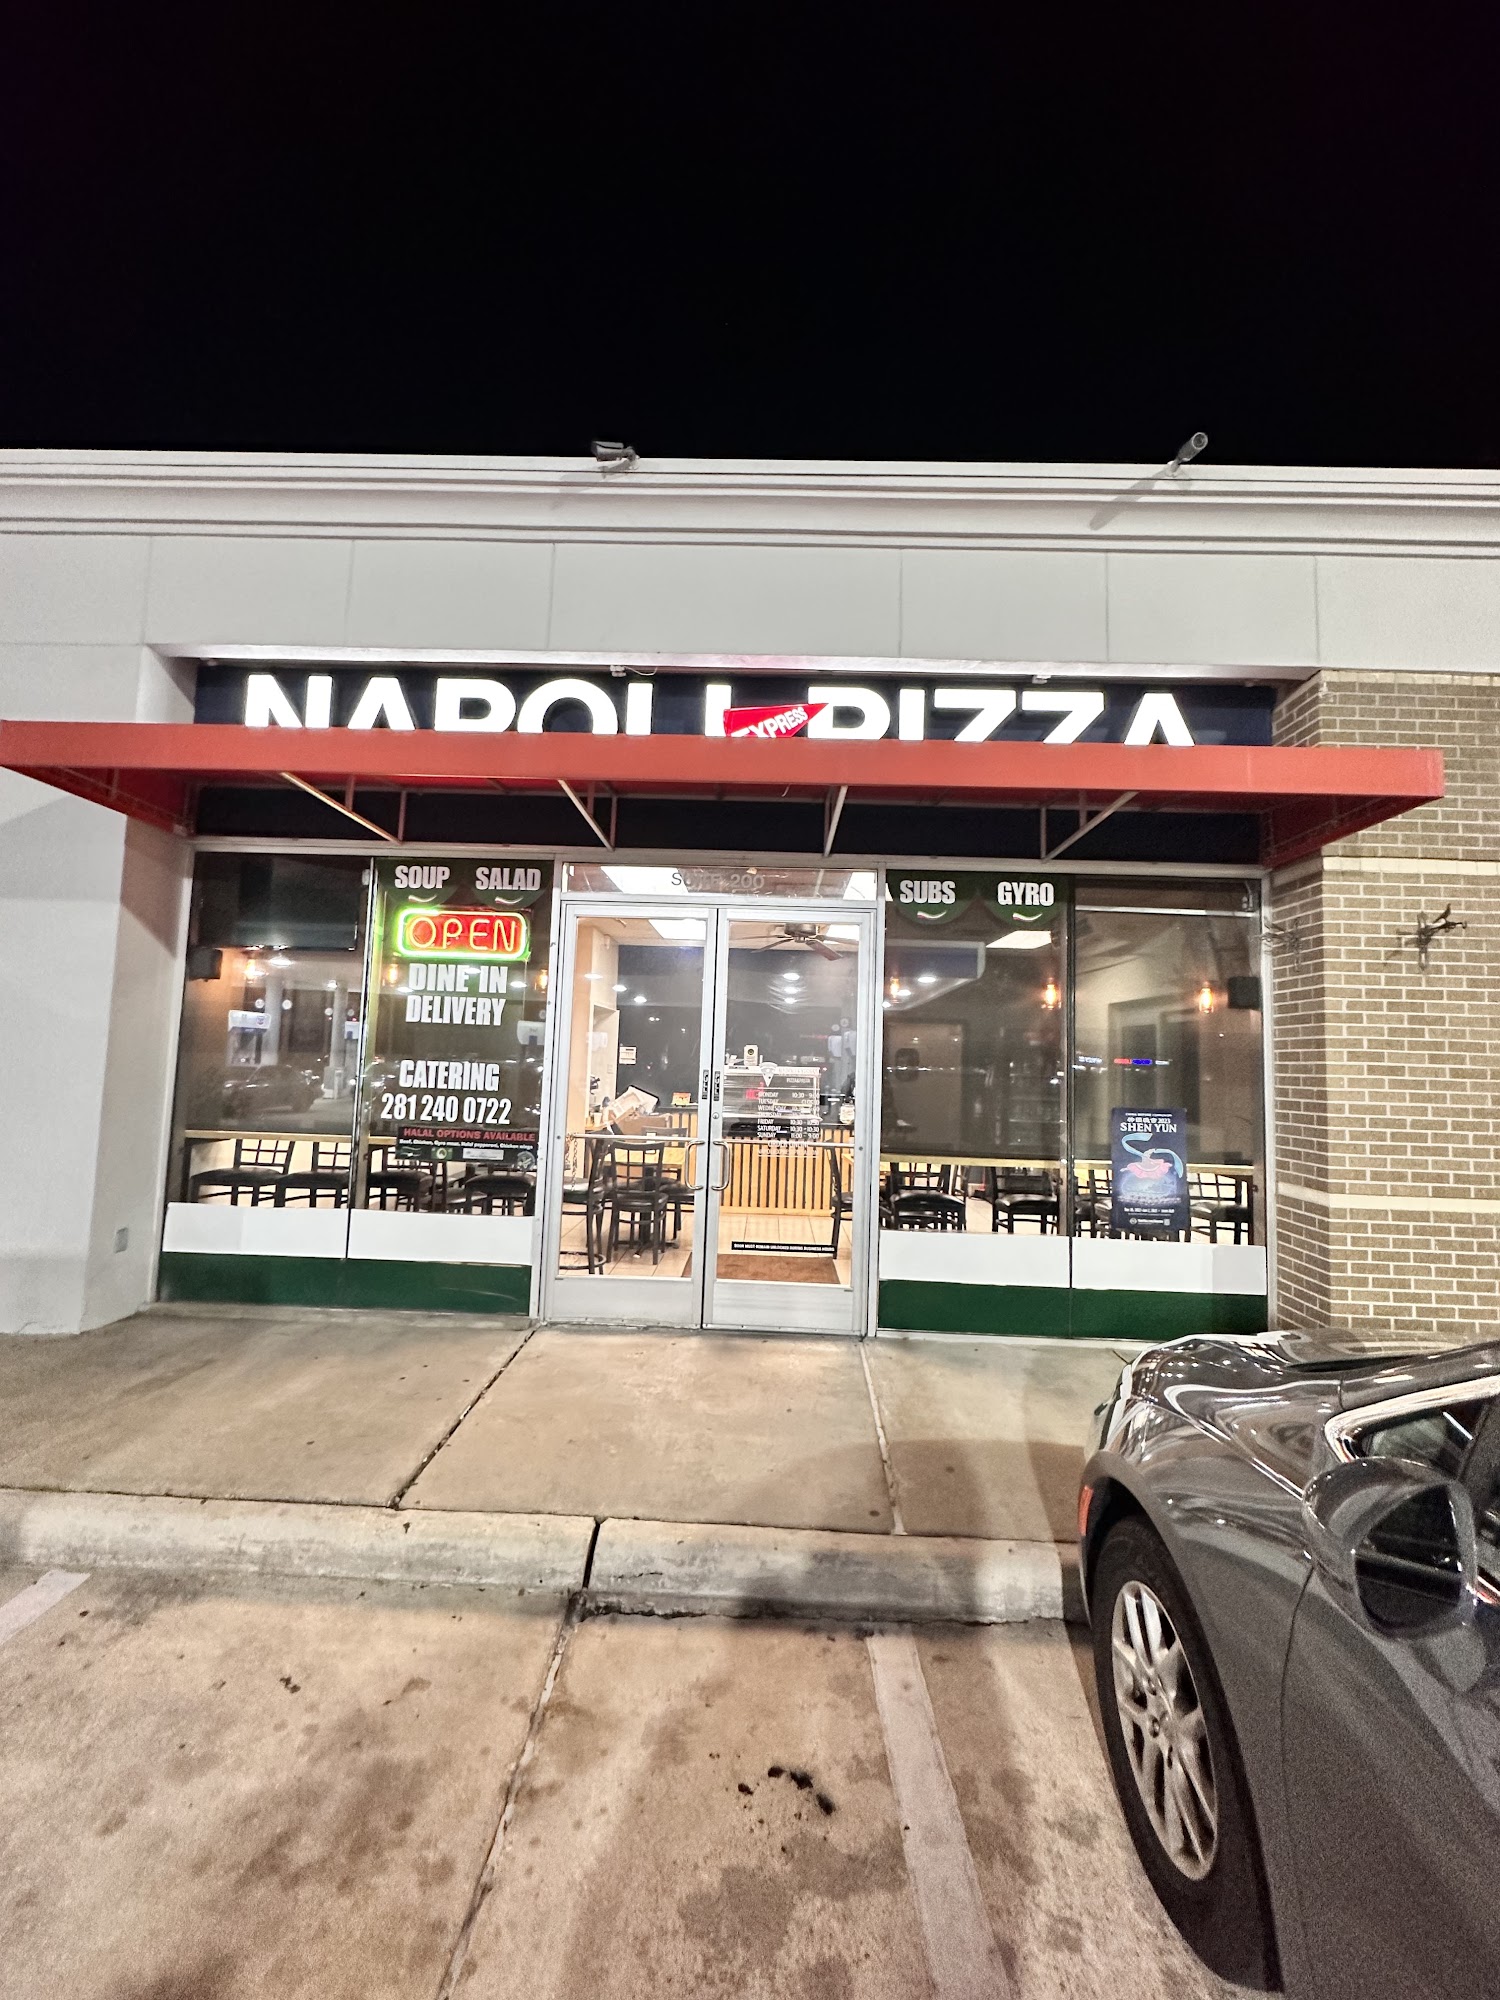 Napoli Express Pizza